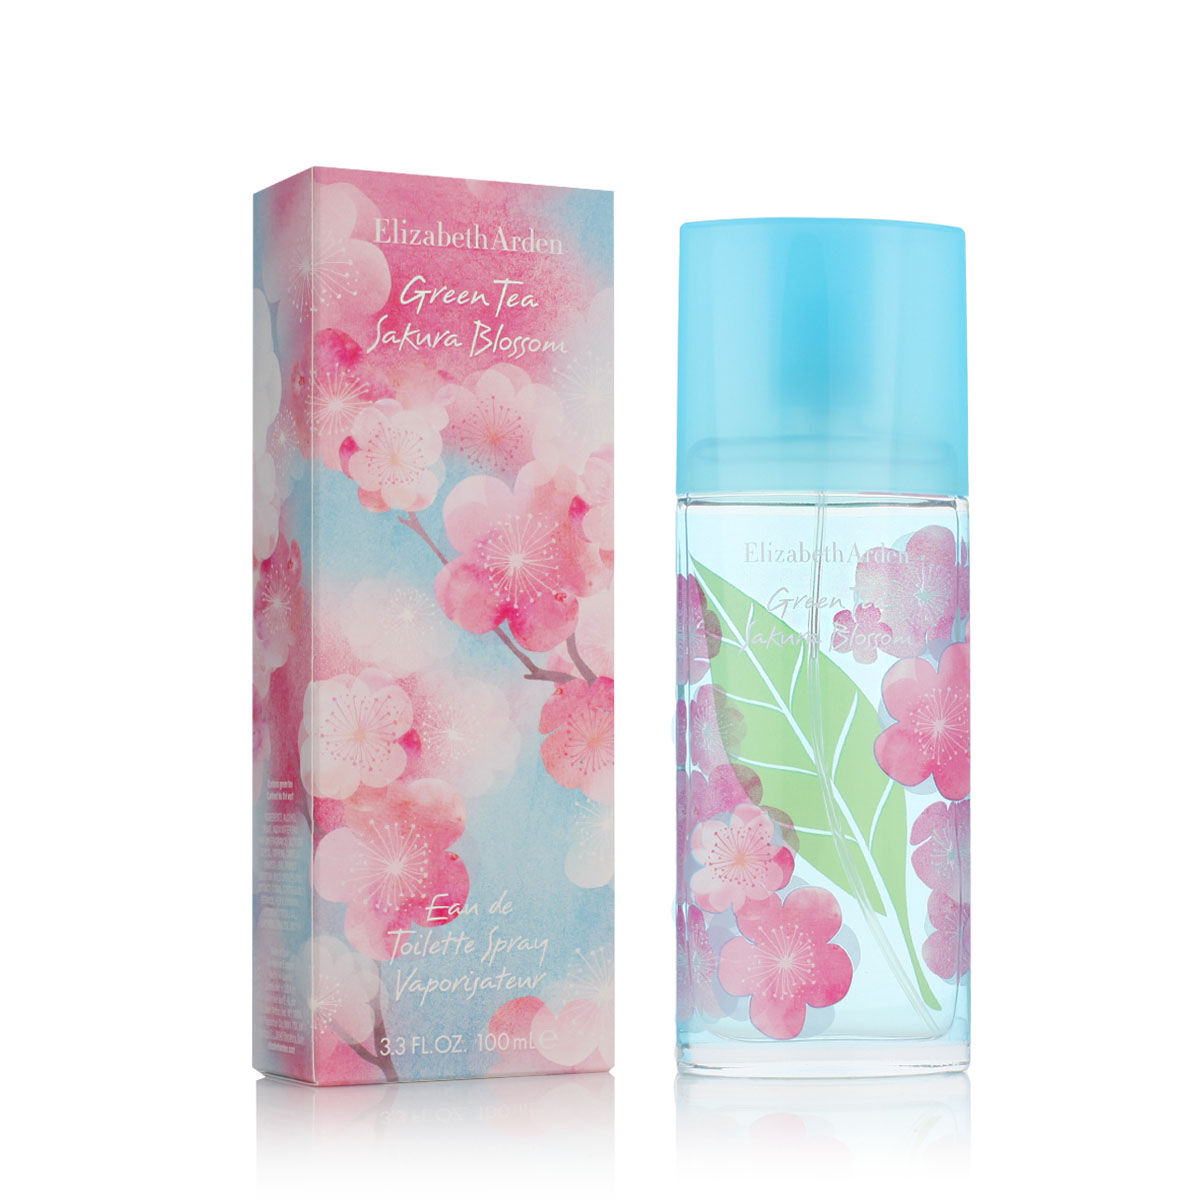 Parfum Femme Elizabeth Arden EDT 100 ml Green Tea Sakura Blossom